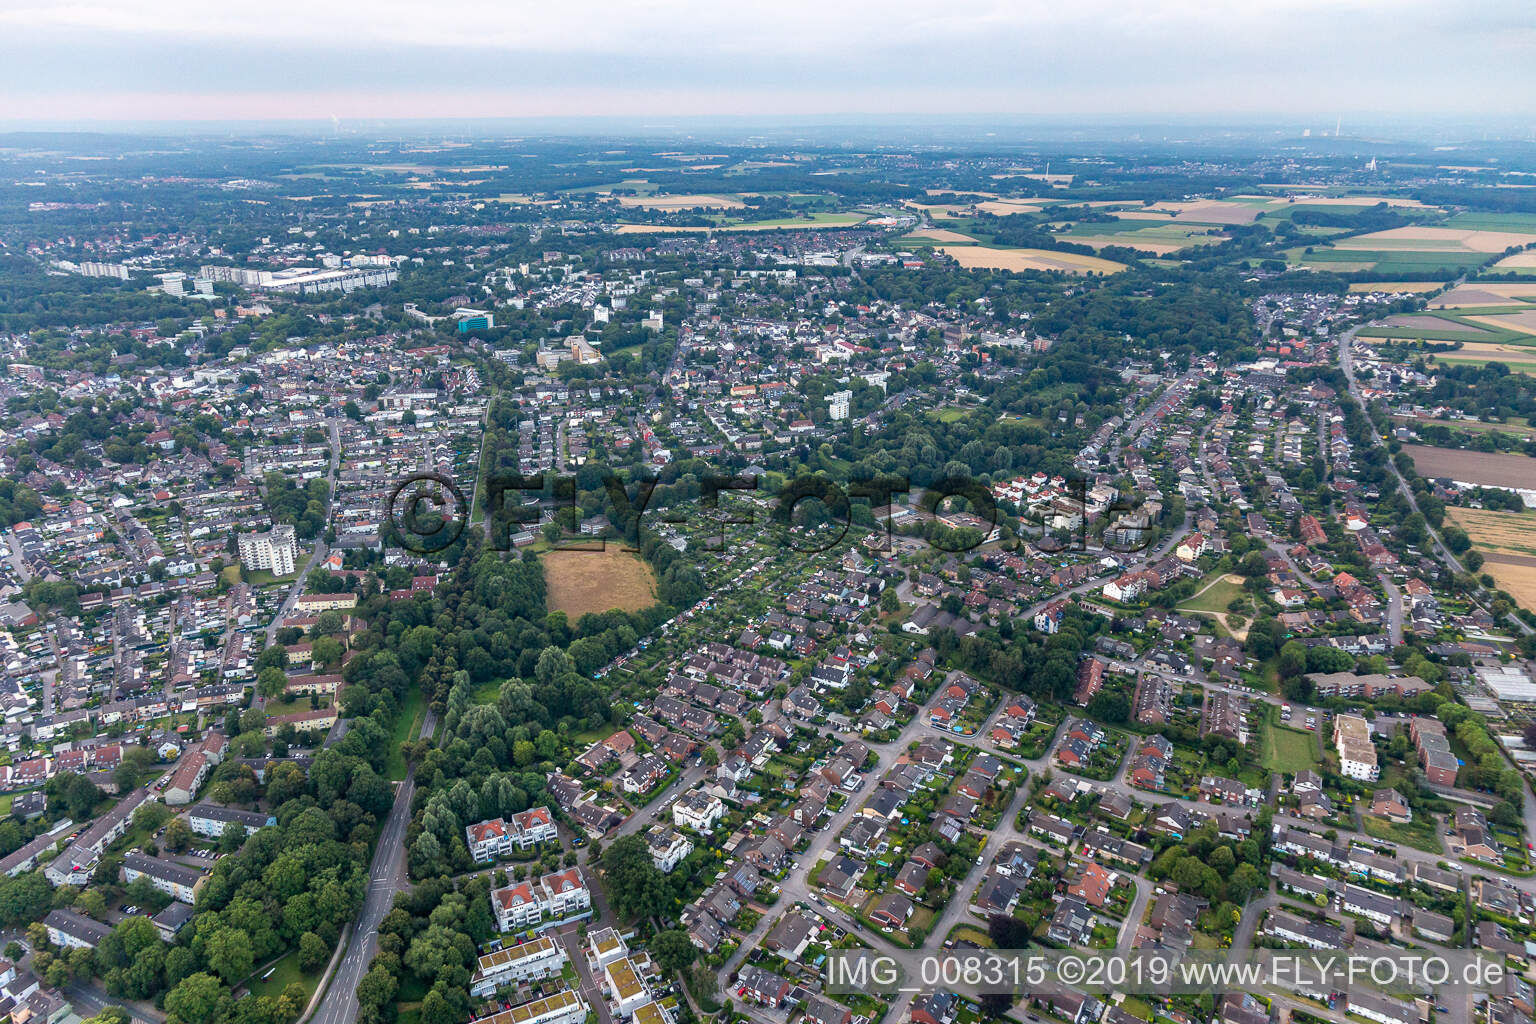 Aerial view of Marl in the state North Rhine-Westphalia, Germany